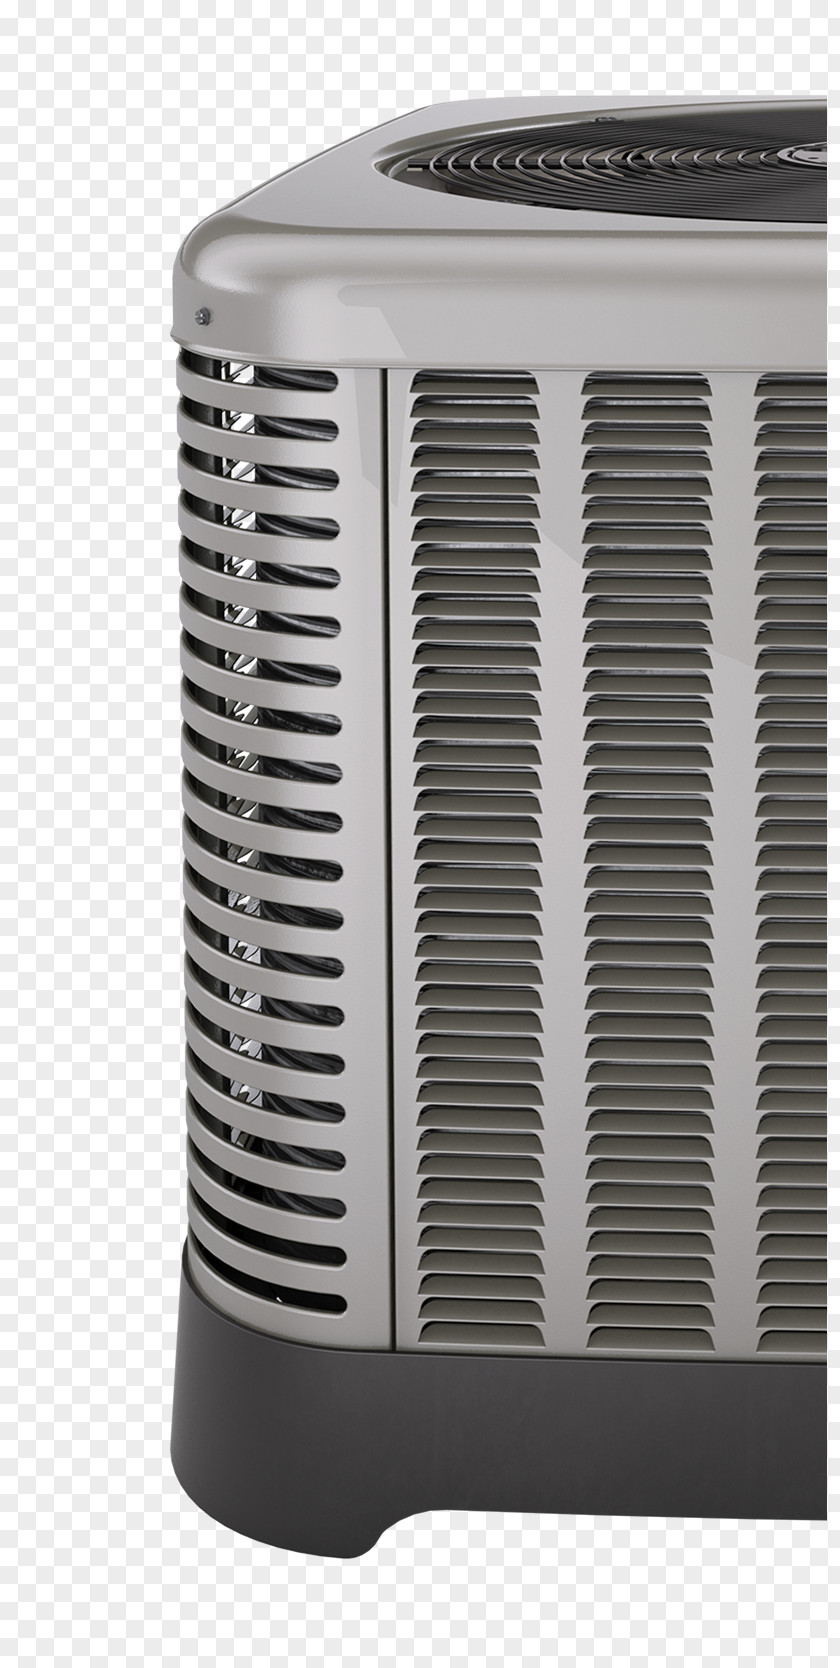 Air Conditioning Technician Furnace Seasonal Energy Efficiency Ratio Rheem Heat Pump Condenser PNG